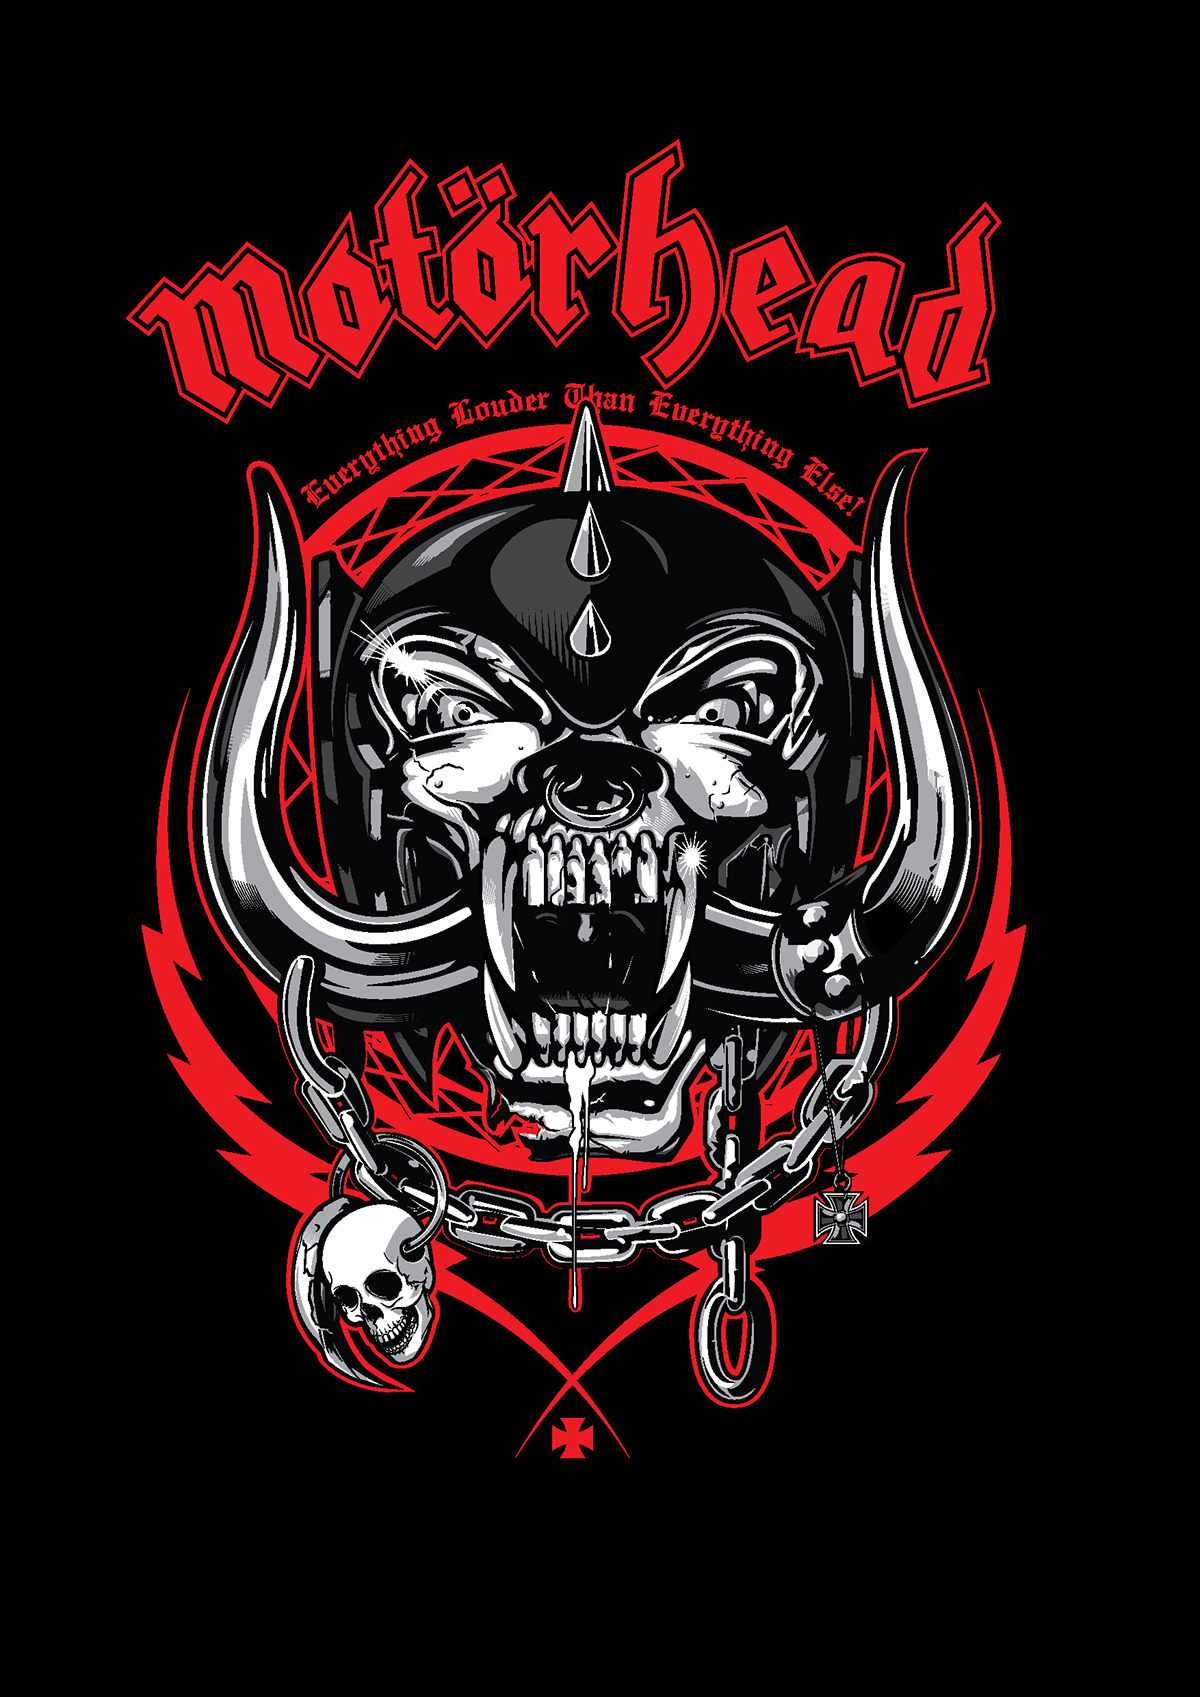 motorhead warpig crest logo official